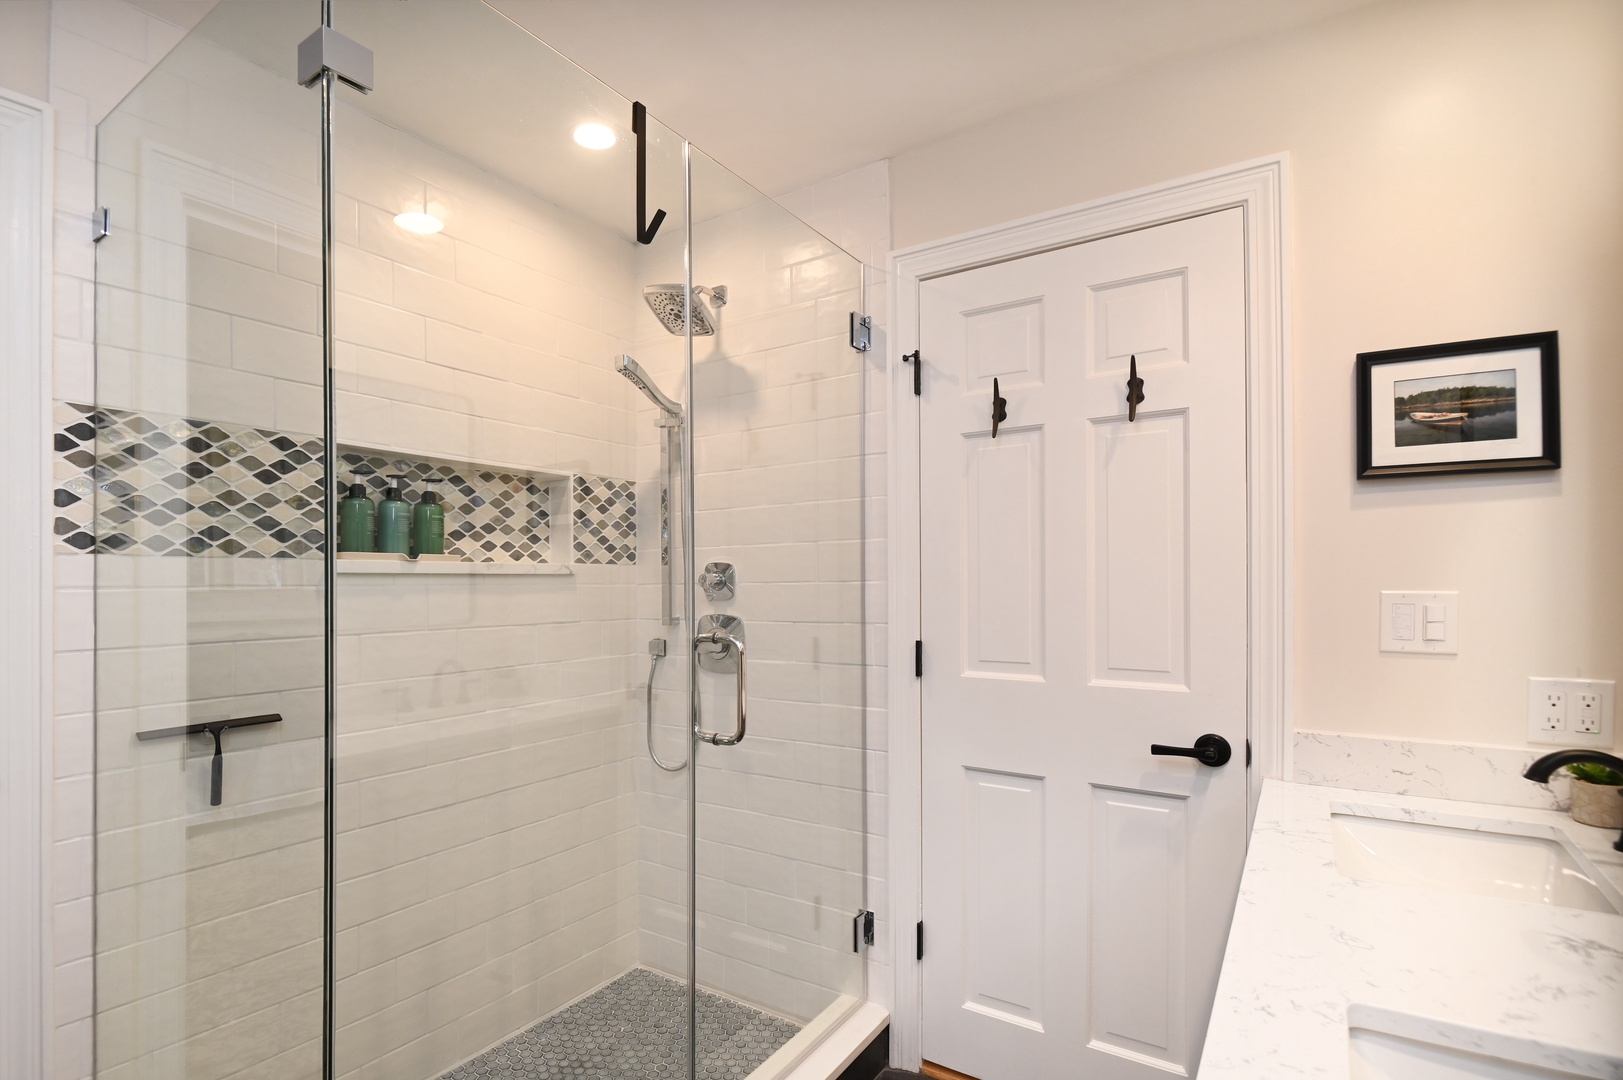 Playhouse’s stylish full bath showcases a double vanity & glass shower